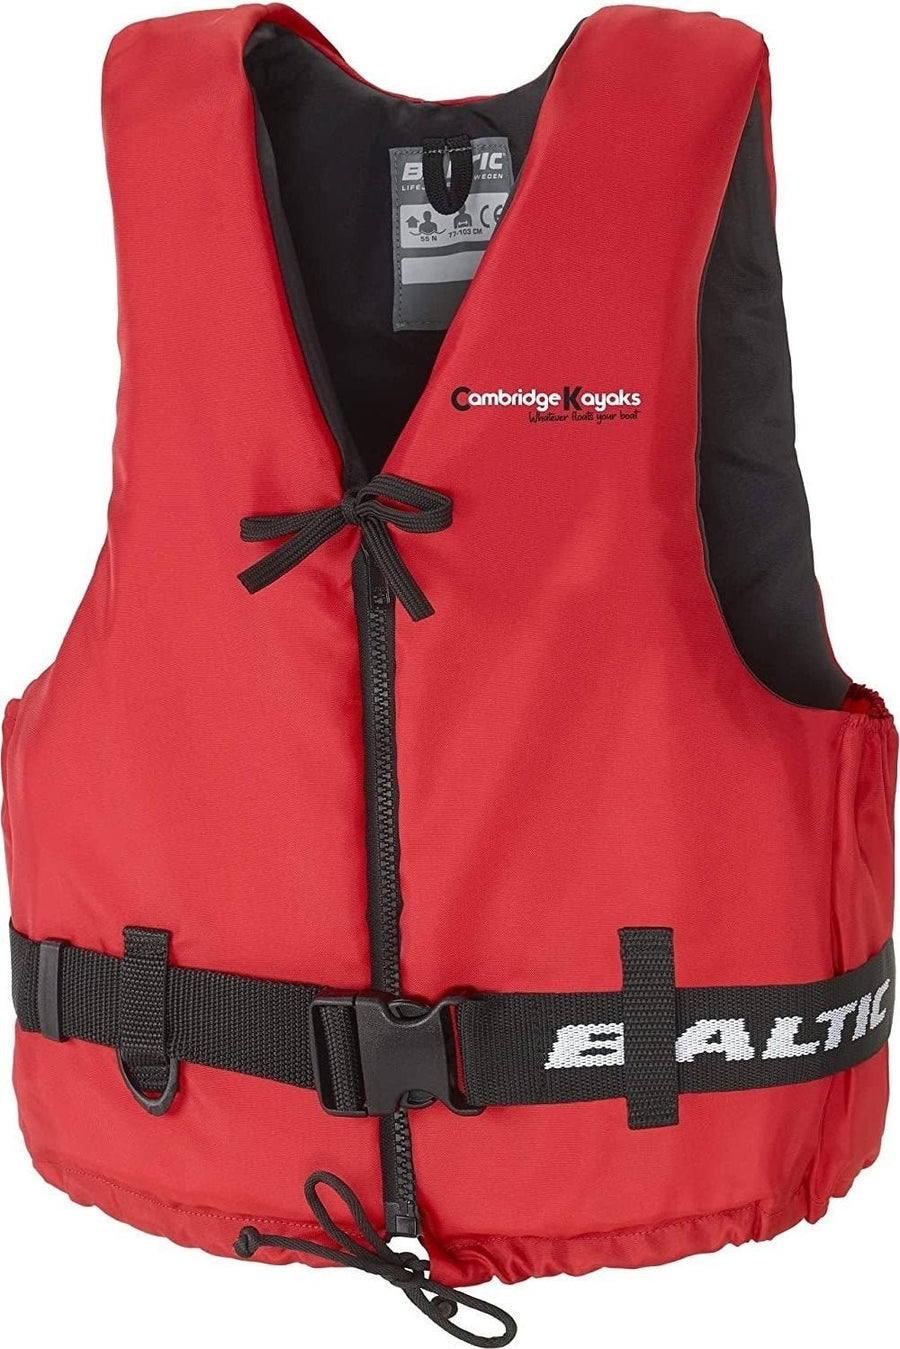 Baltic Aqua Pro Buoyancy Aid from Cambridge Kayaks